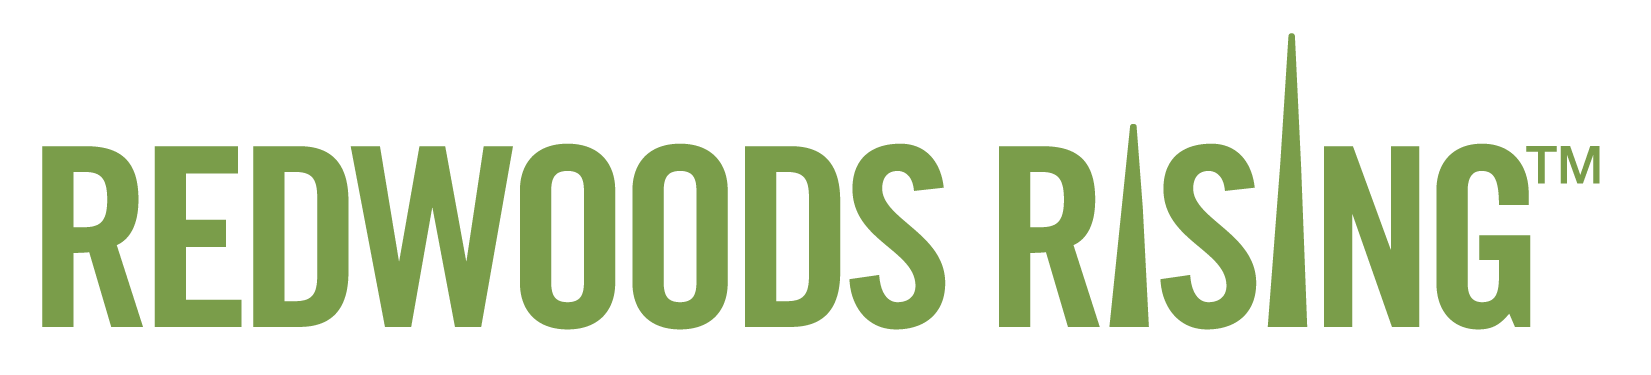 Redwoods Rising logo